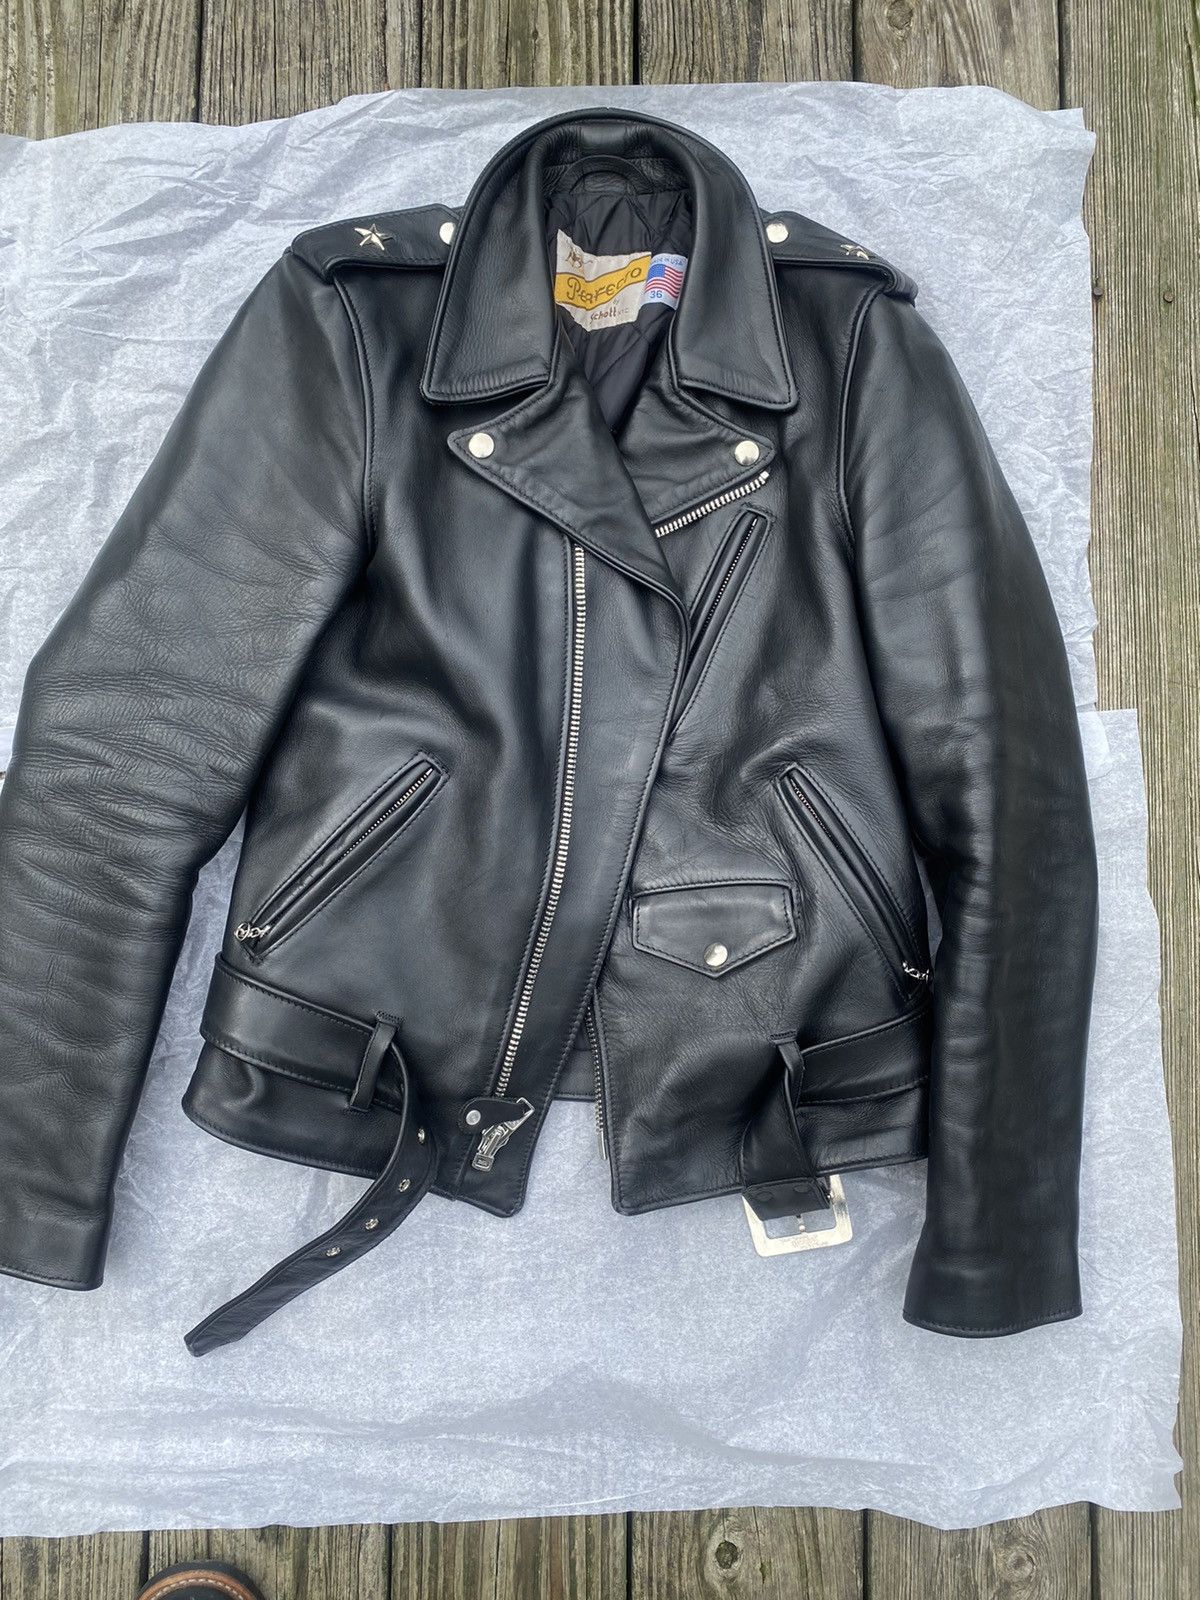 Schott Schott 613S Perfecto One Star Black Leather Jacket | Grailed